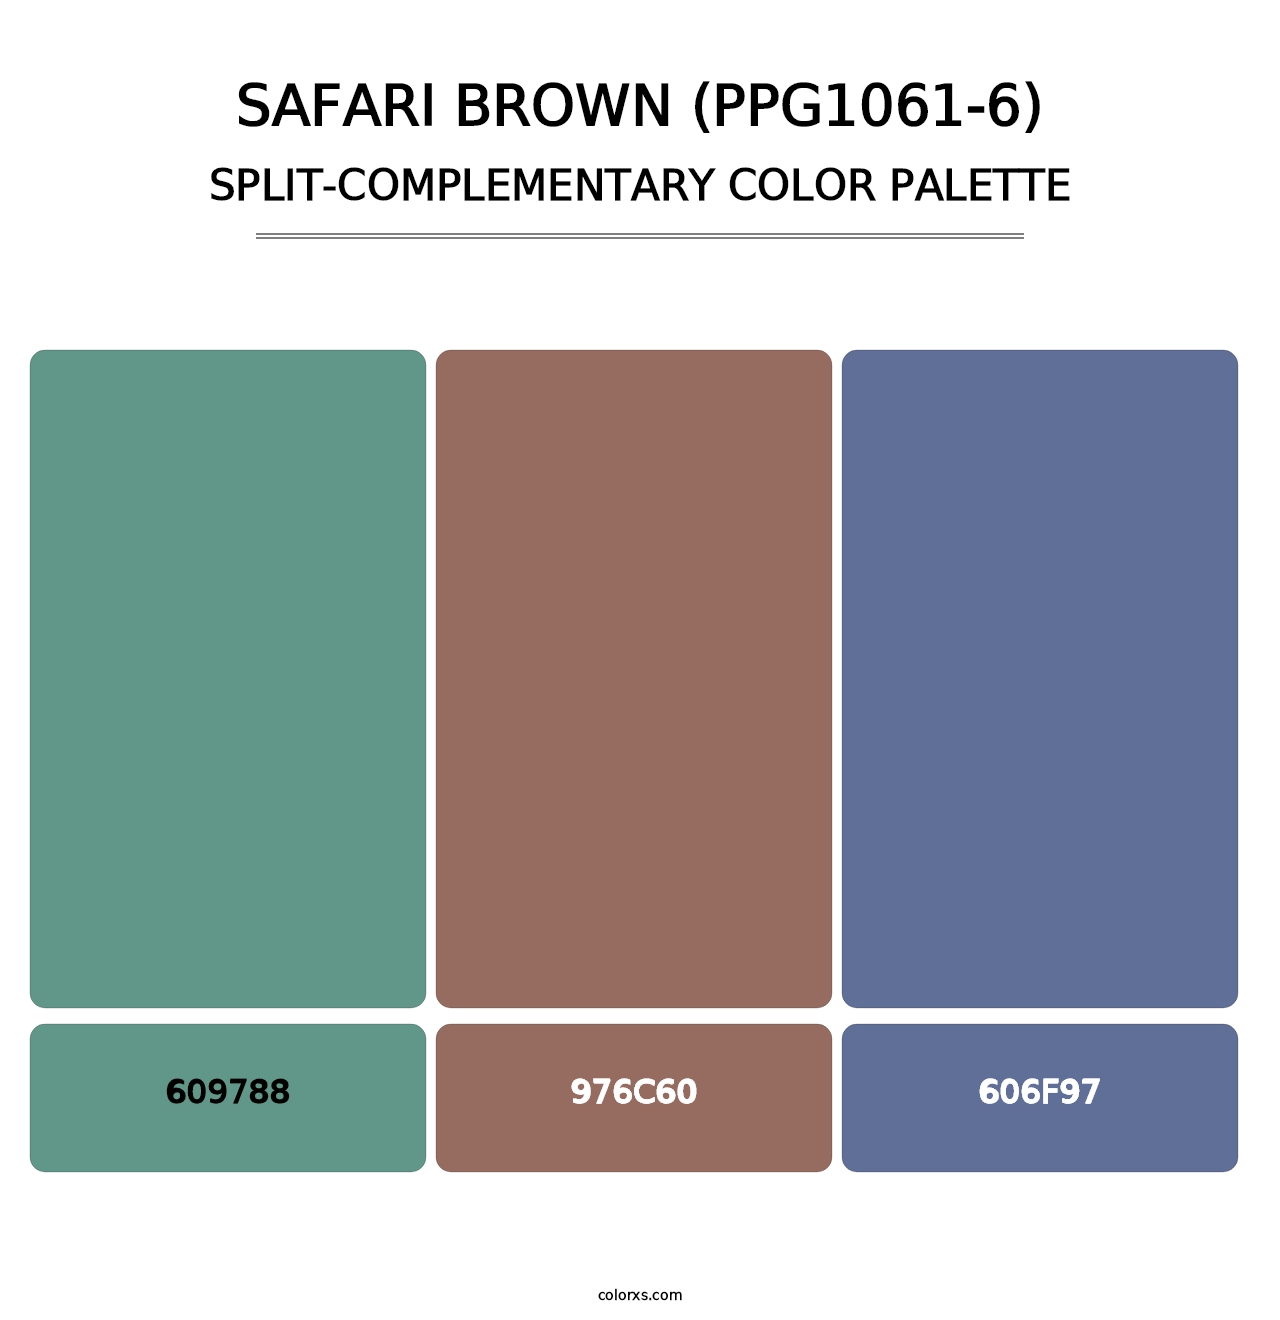 Safari Brown (PPG1061-6) - Split-Complementary Color Palette